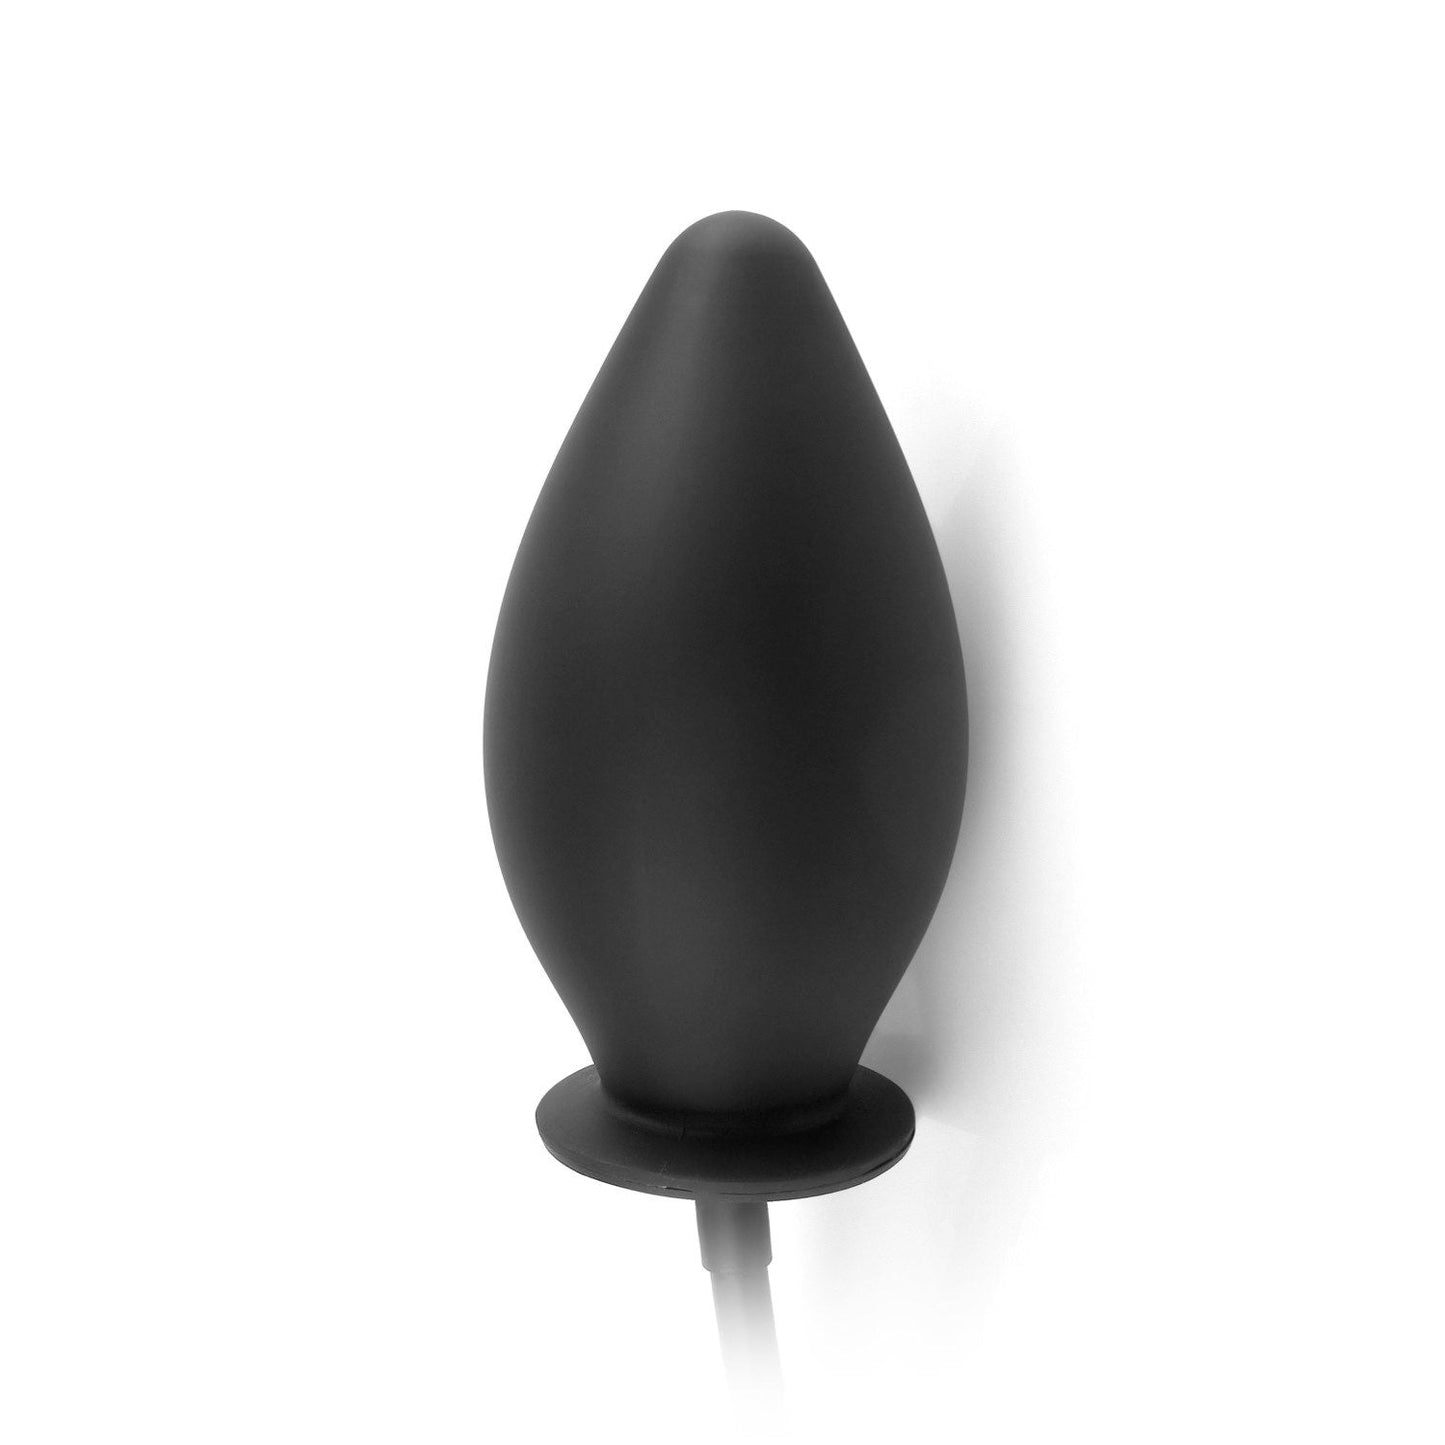 Inflatable Silicone Plug - Black 10.8 cm (4.25") Inflatable Butt Plug